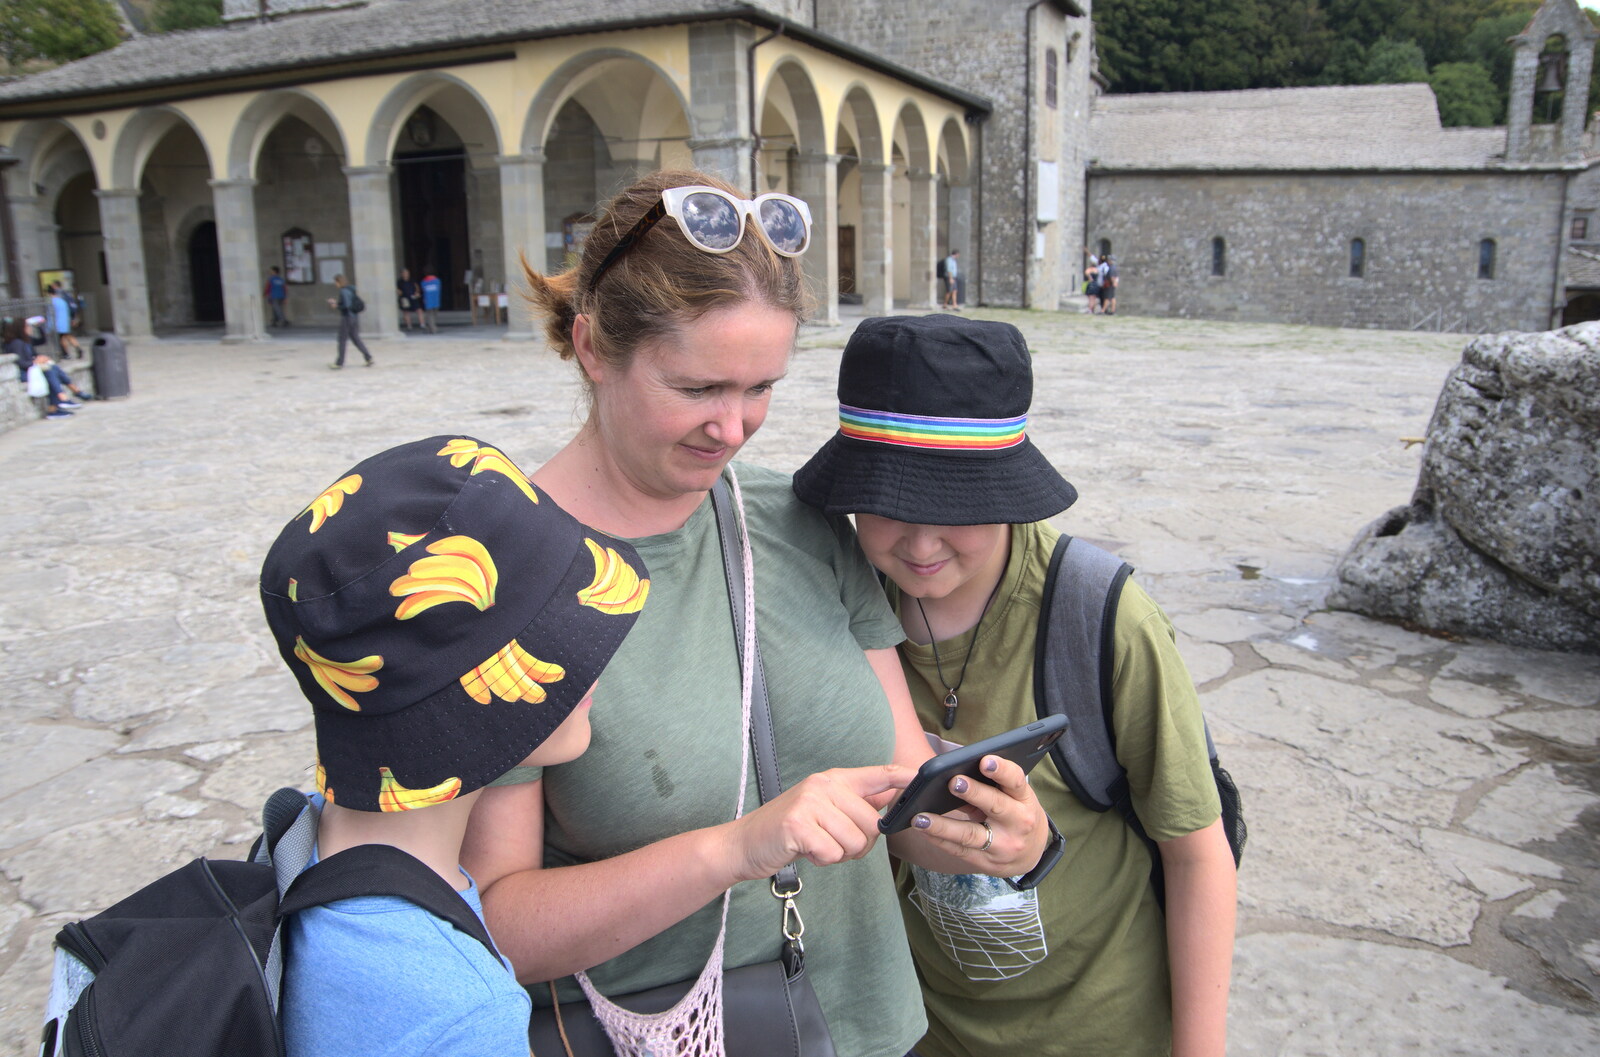 Castiglio Del Lago and Santuario della Verna, Umbria and Tuscany, Italy - 1st September 2022: Harry, Isobel and Fred look at a phone photo